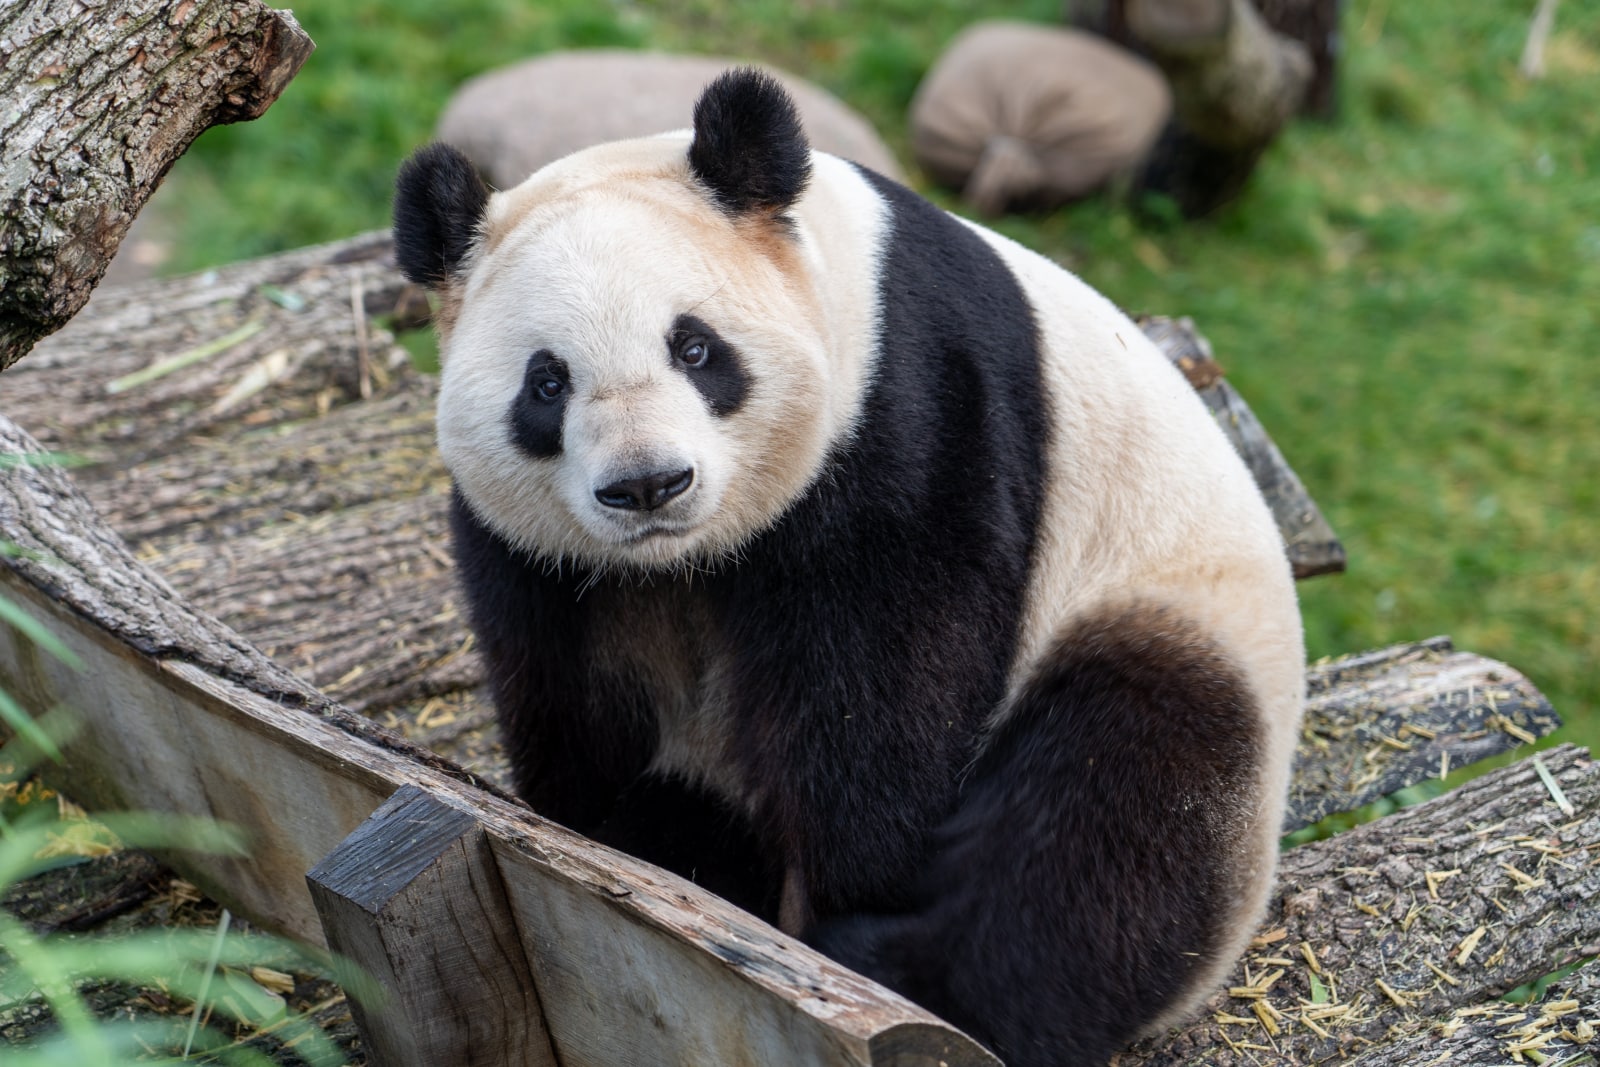 Panda sitting on wood